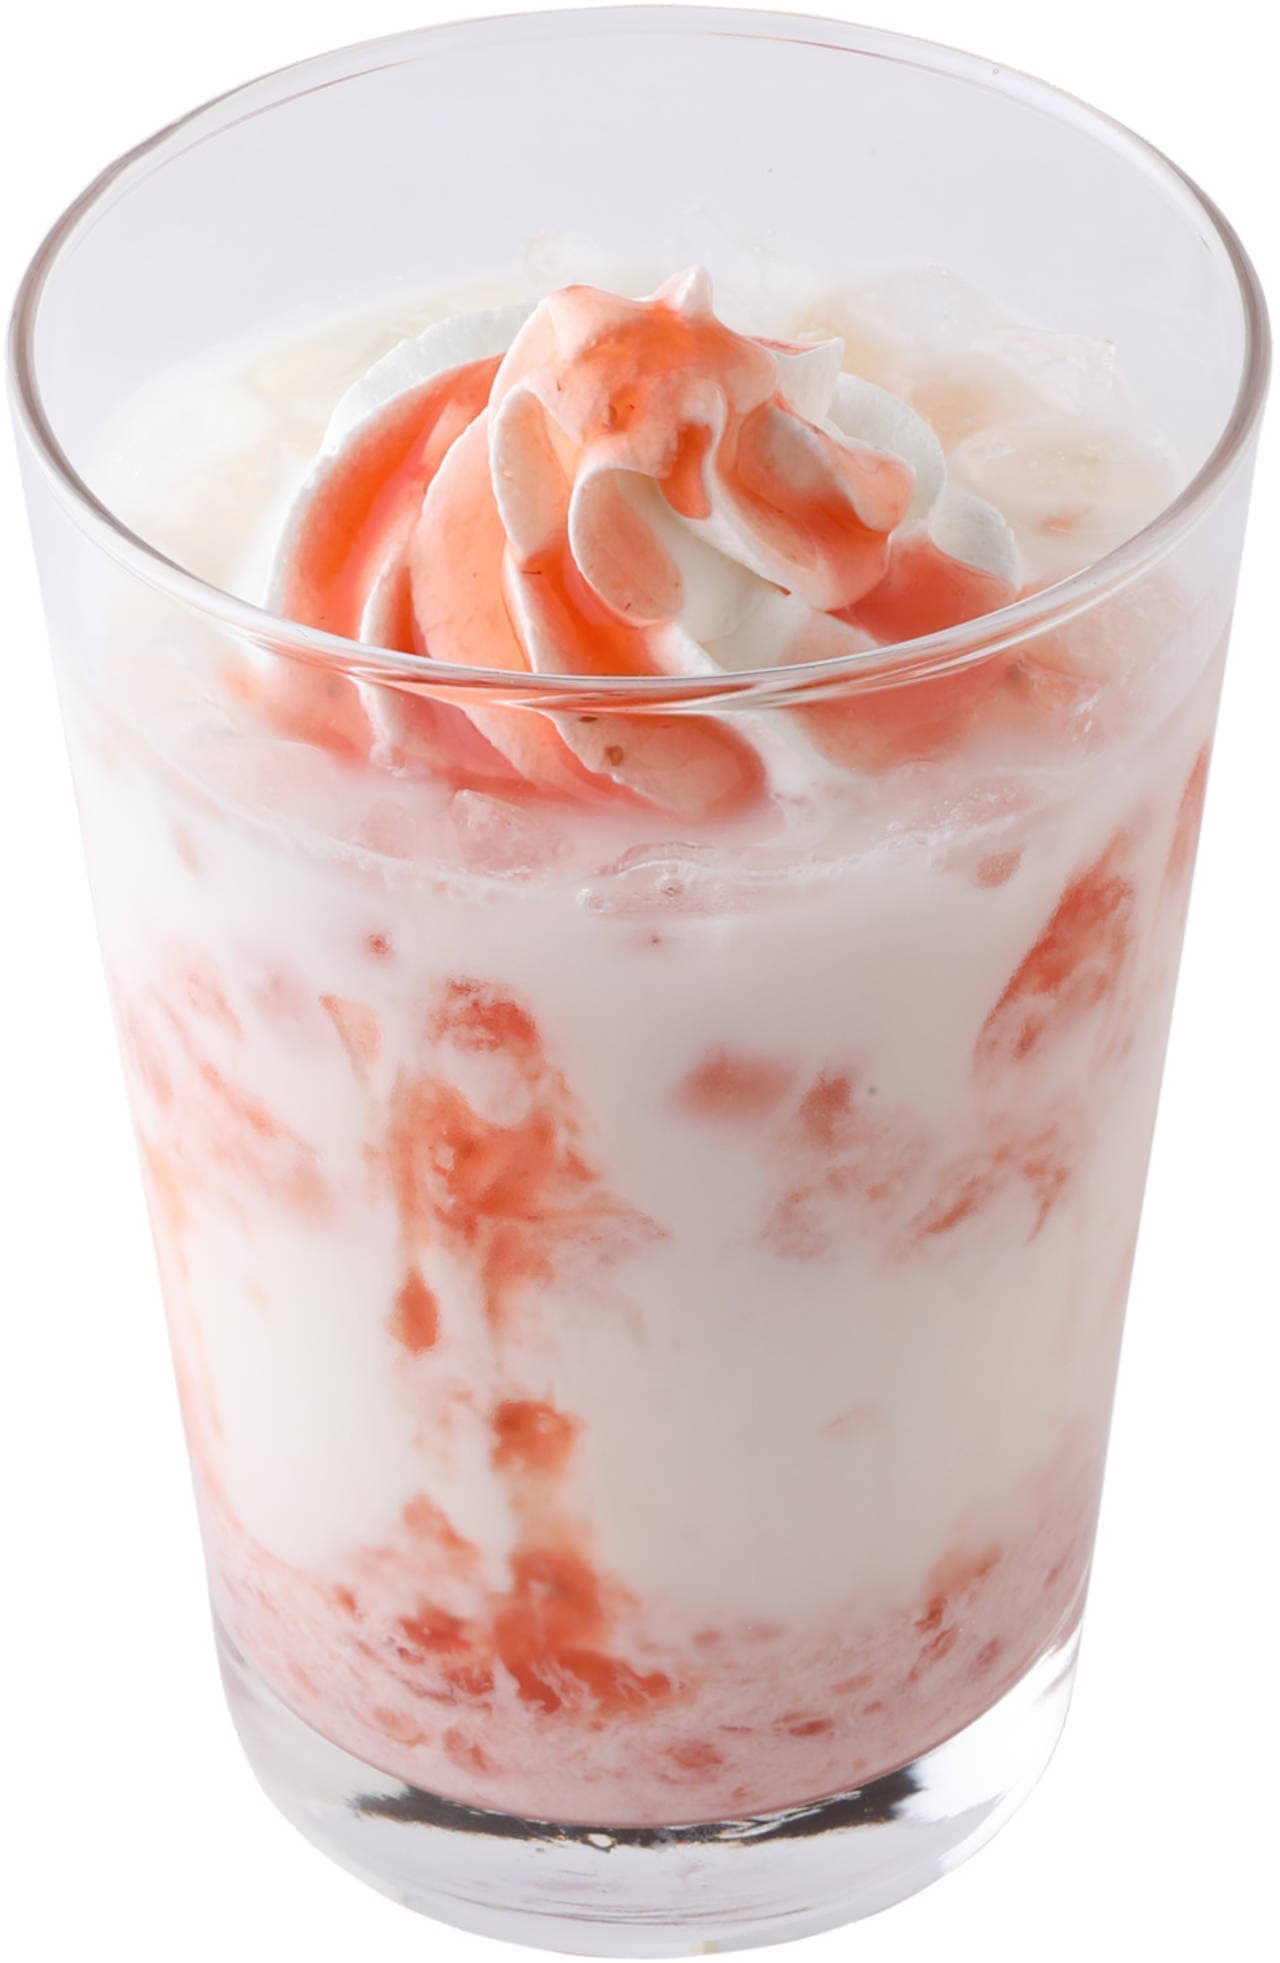 Mos Burger & Cafe "Strawberry Milk [Using 3% strawberry pulp]".